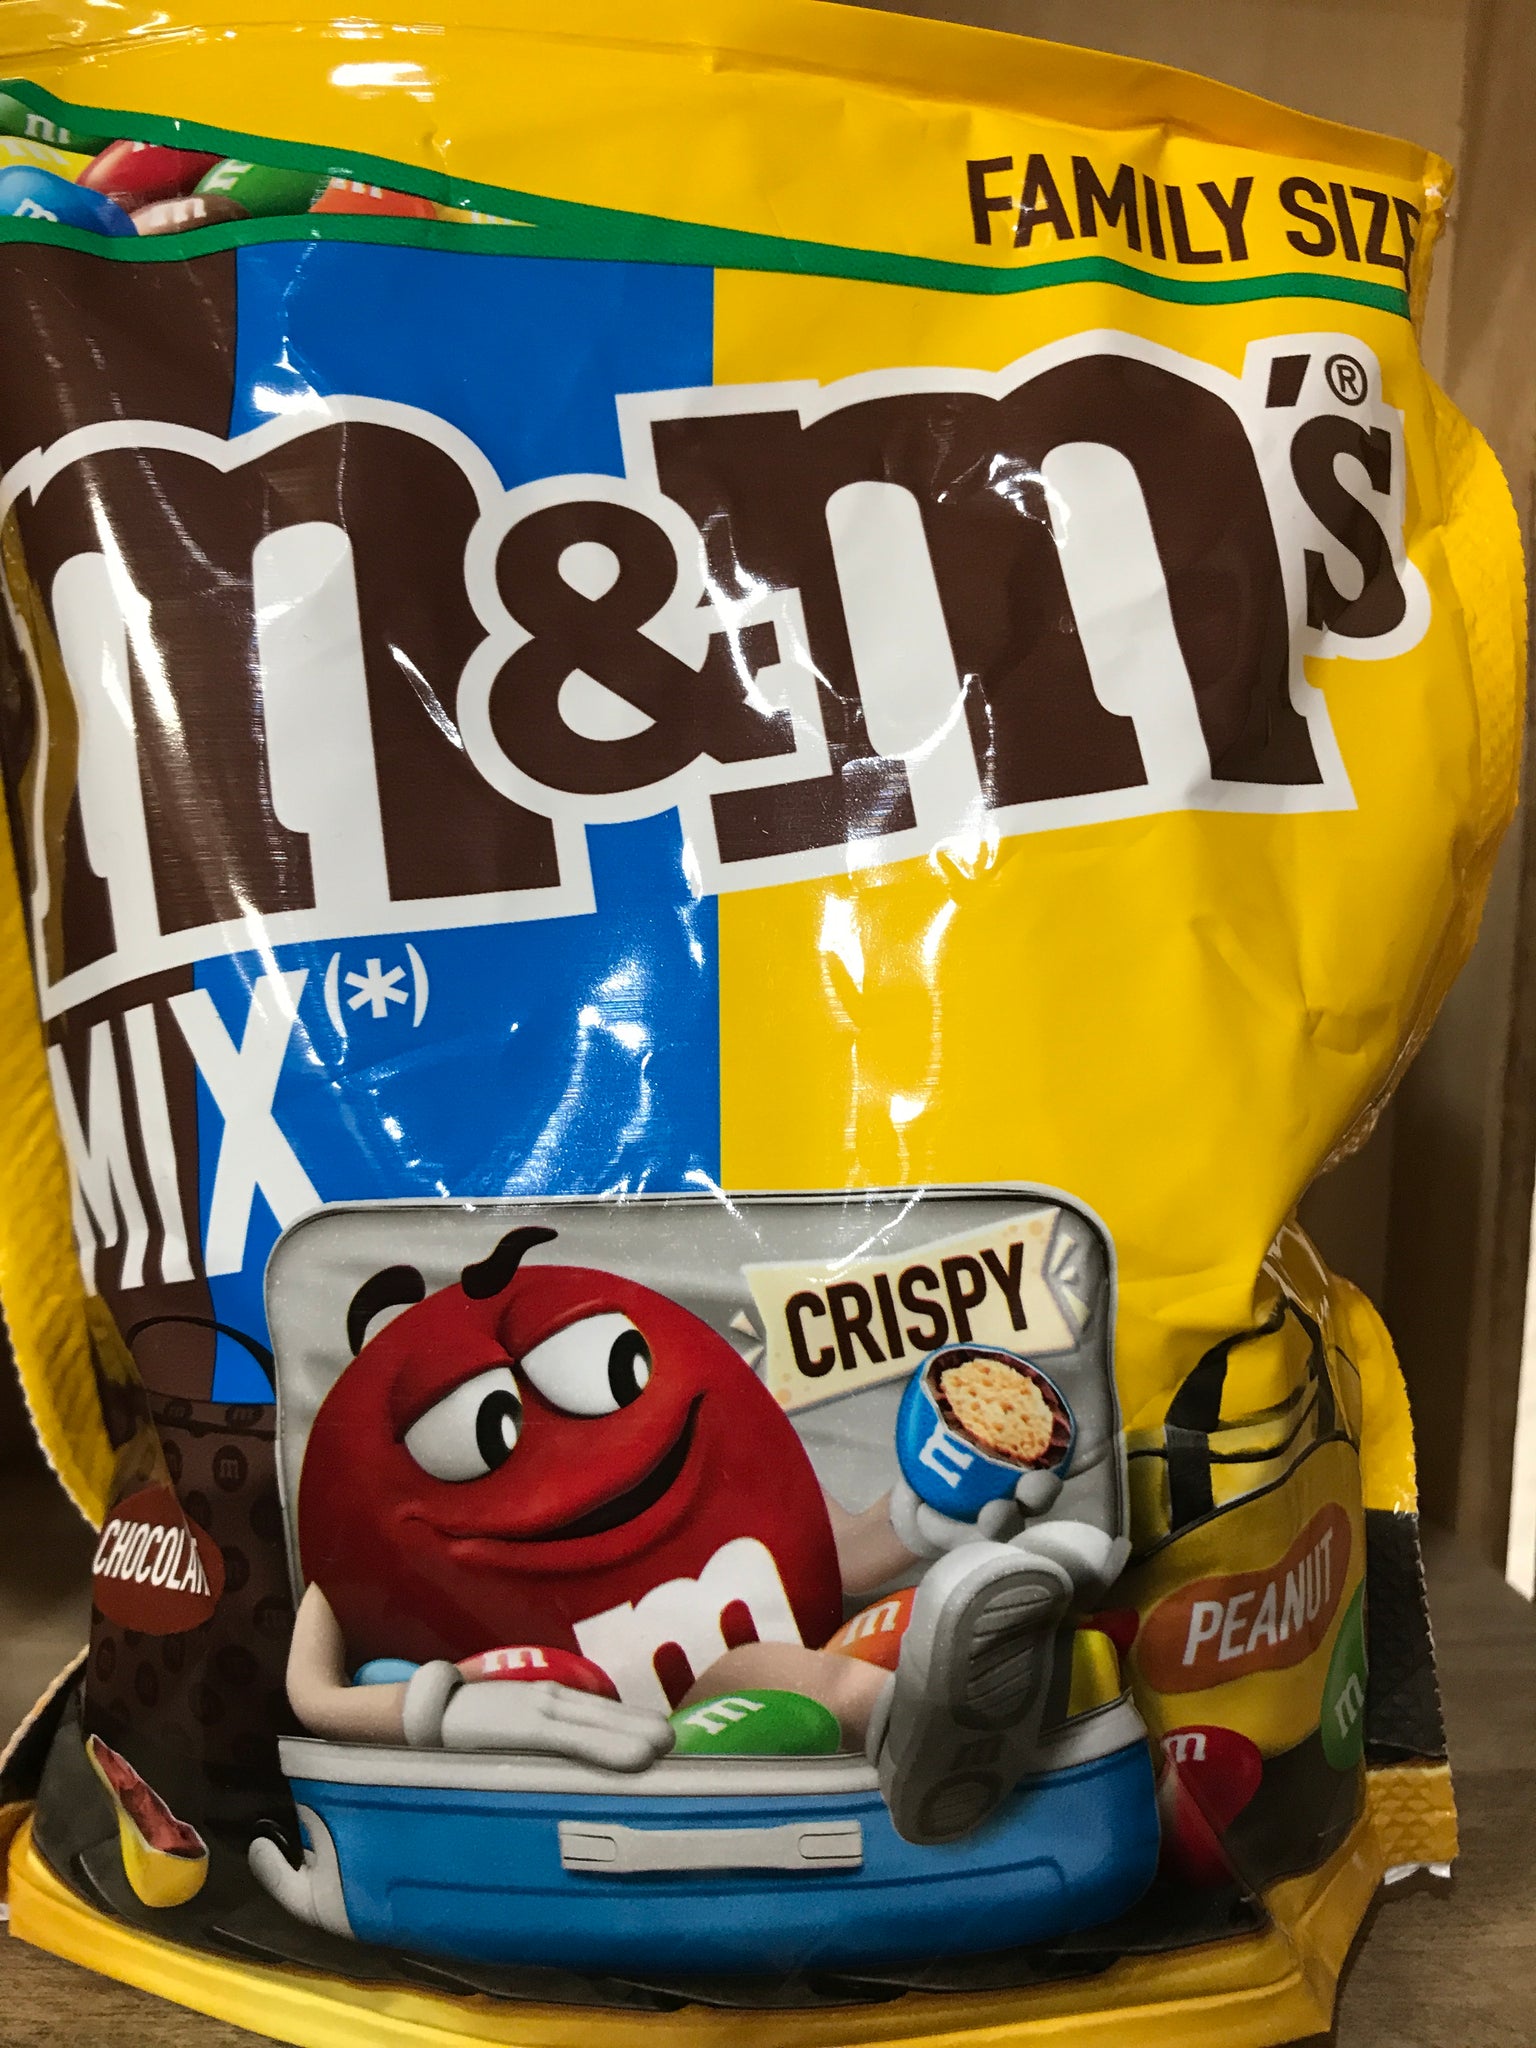 M&M's Peanut Mix